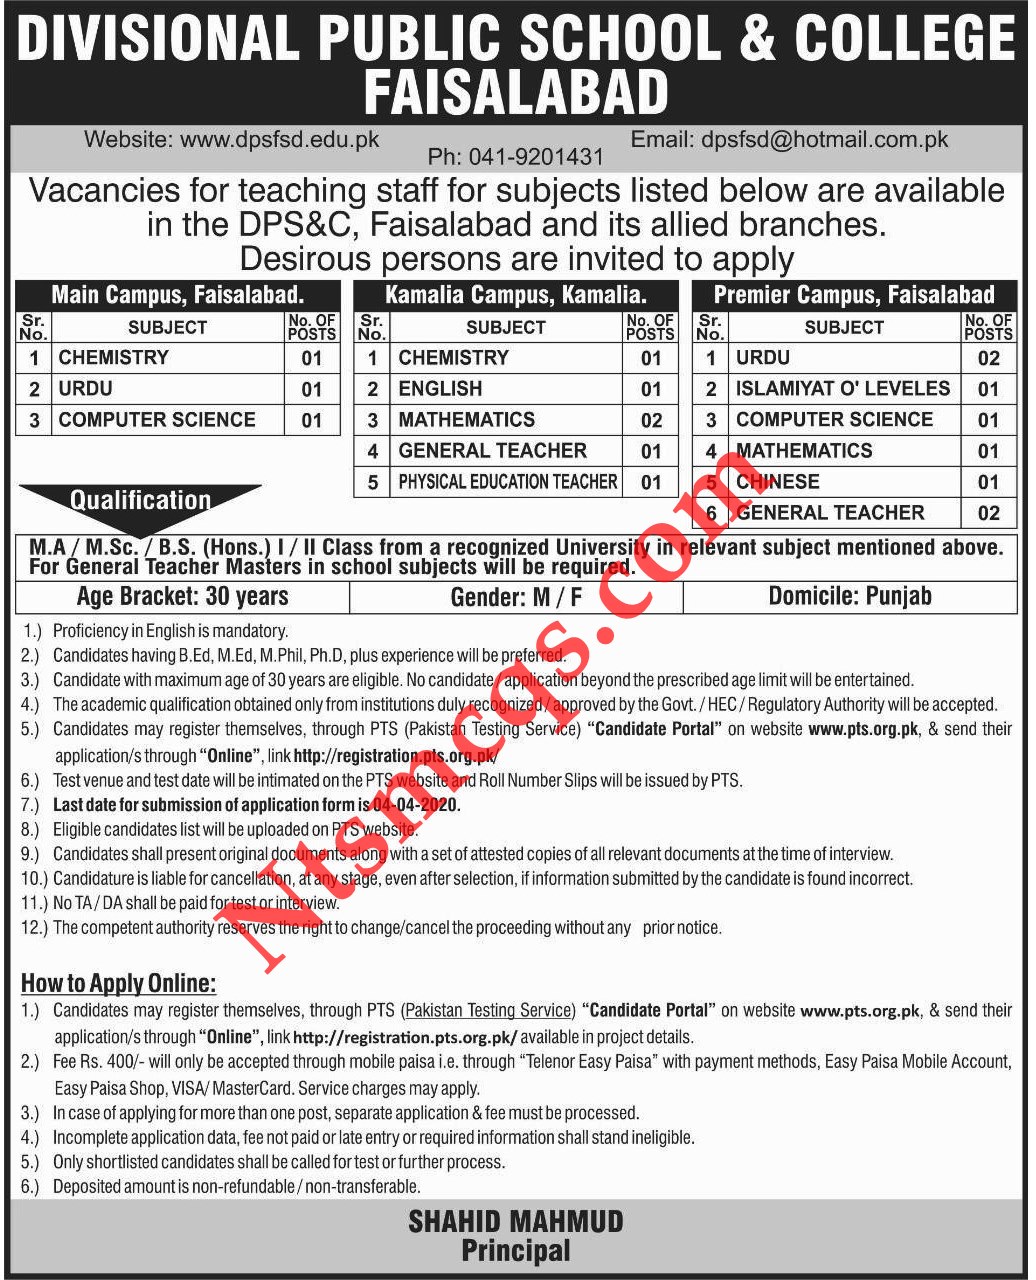 Divisional Public School & College Faisalabad Jobs 2021 PTS Application Form Eligibility Criteria Roll No Slip